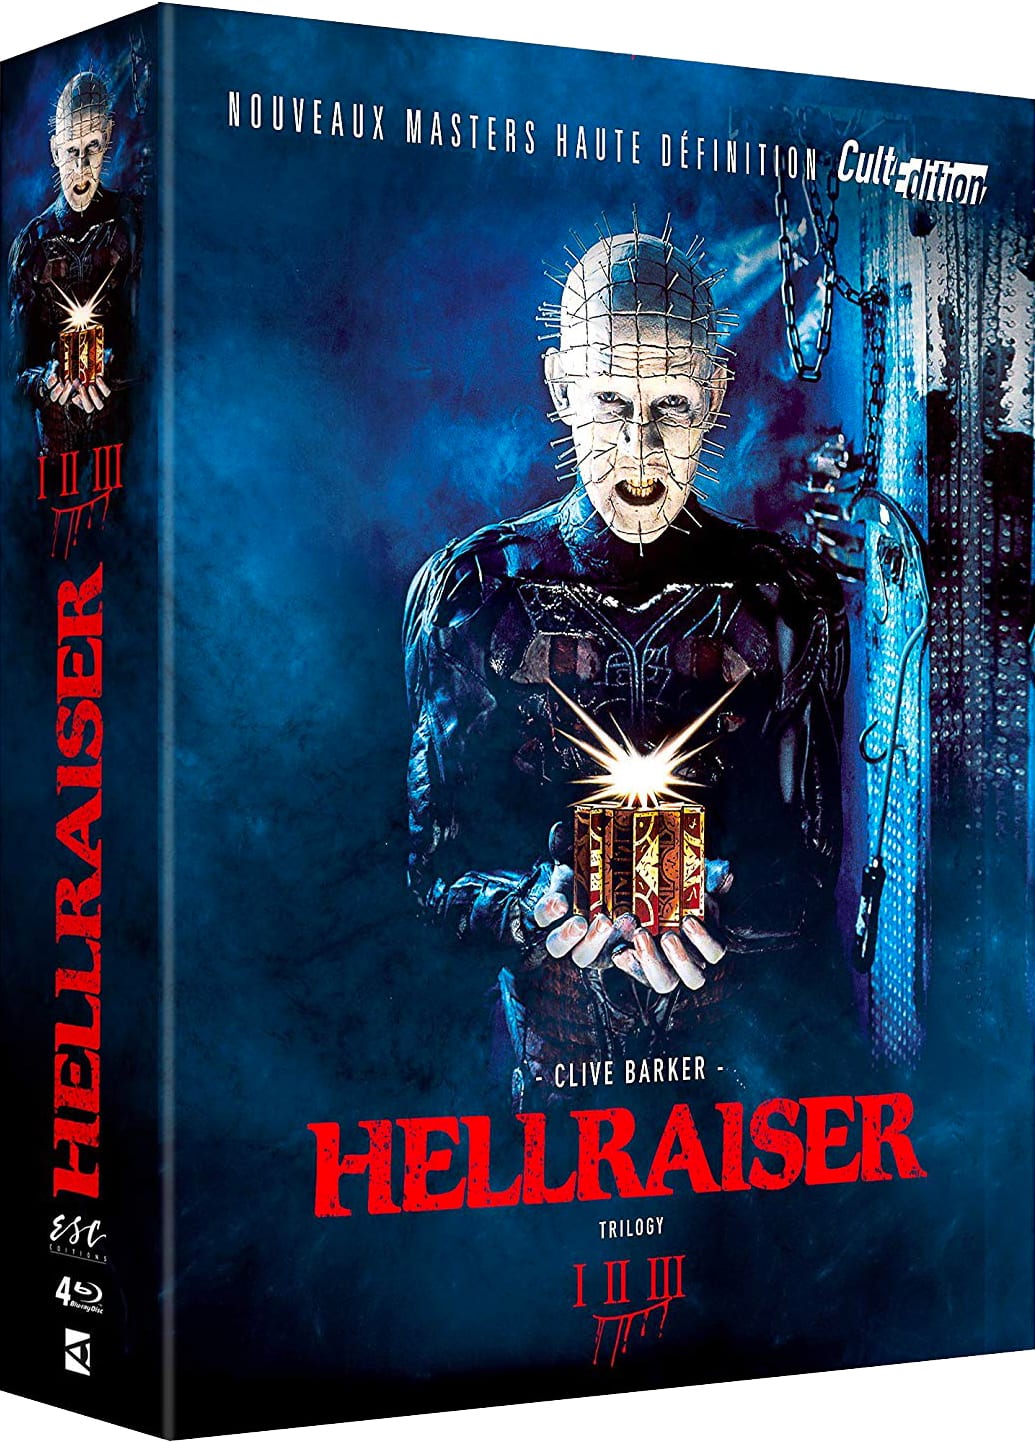 Восставший из ада книга. Восставший из ада 4 Blu-ray. 2022 - Hellraiser - обложка диска - Blu-ray. Восставший из ада (Hellraiser), 1987. Клайв Баркер Восставший из ада.